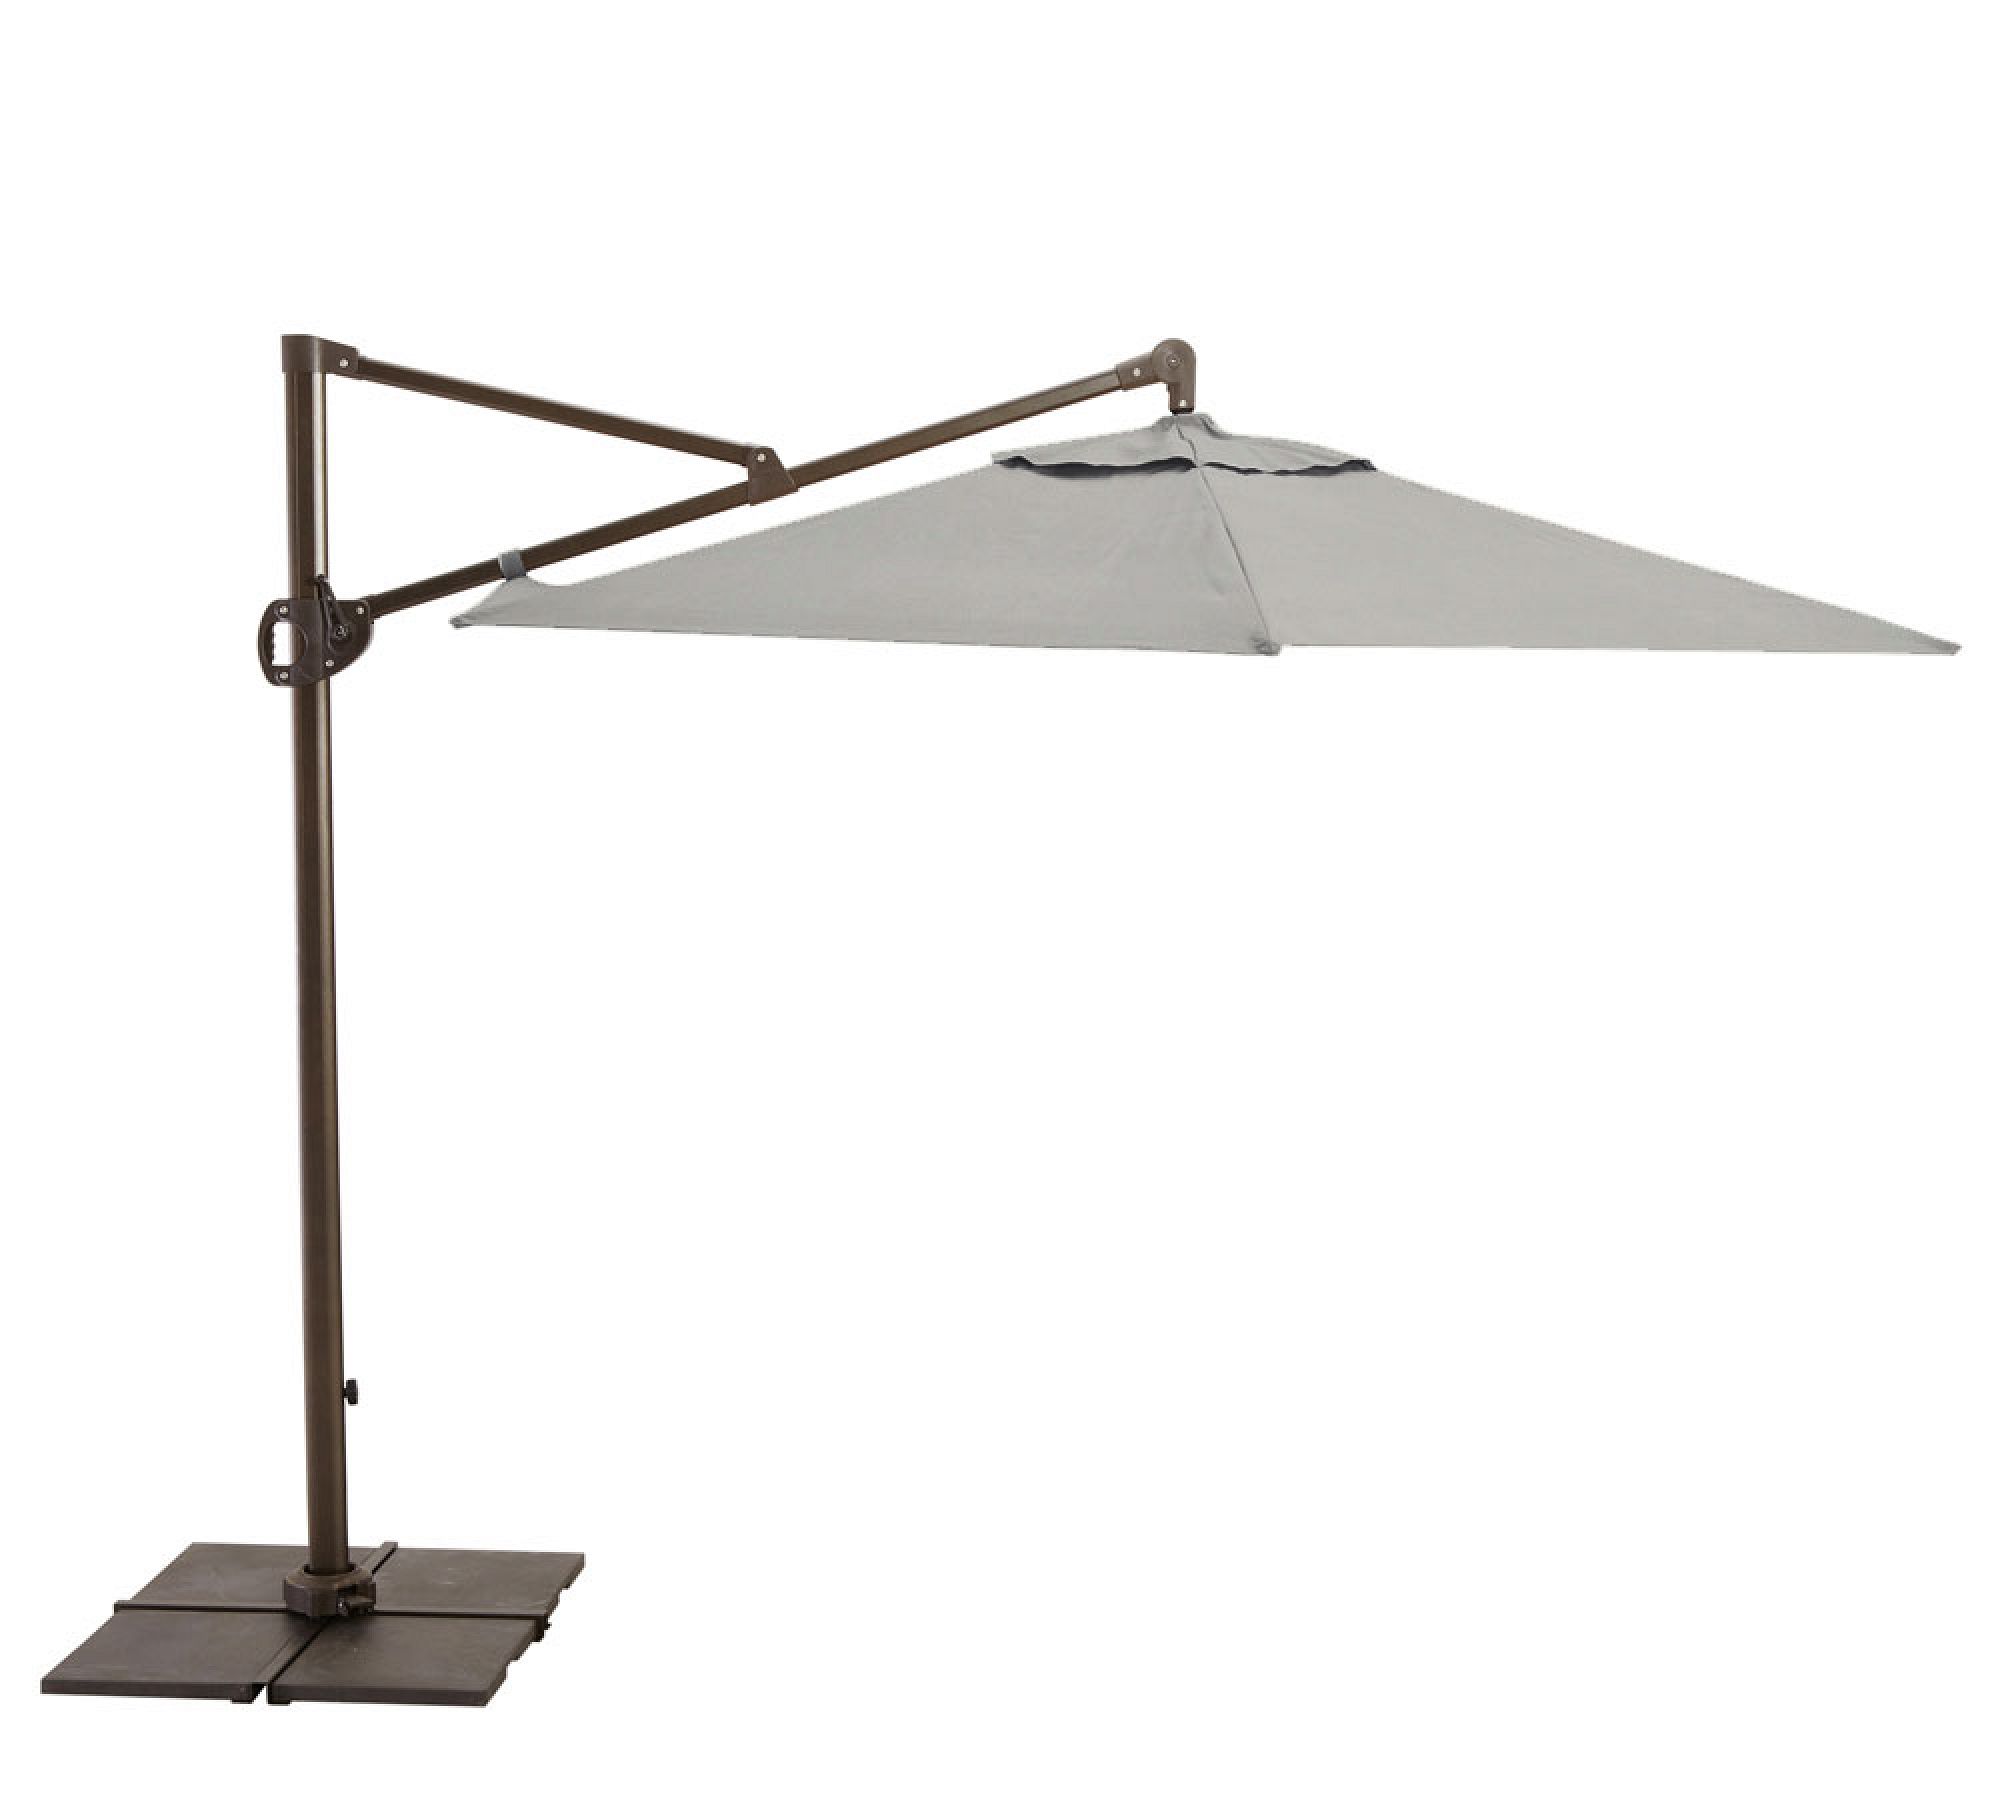 10' Round Cantilever Outdoor Patio Umbrella - Rustproof Aluminum Frame with Base